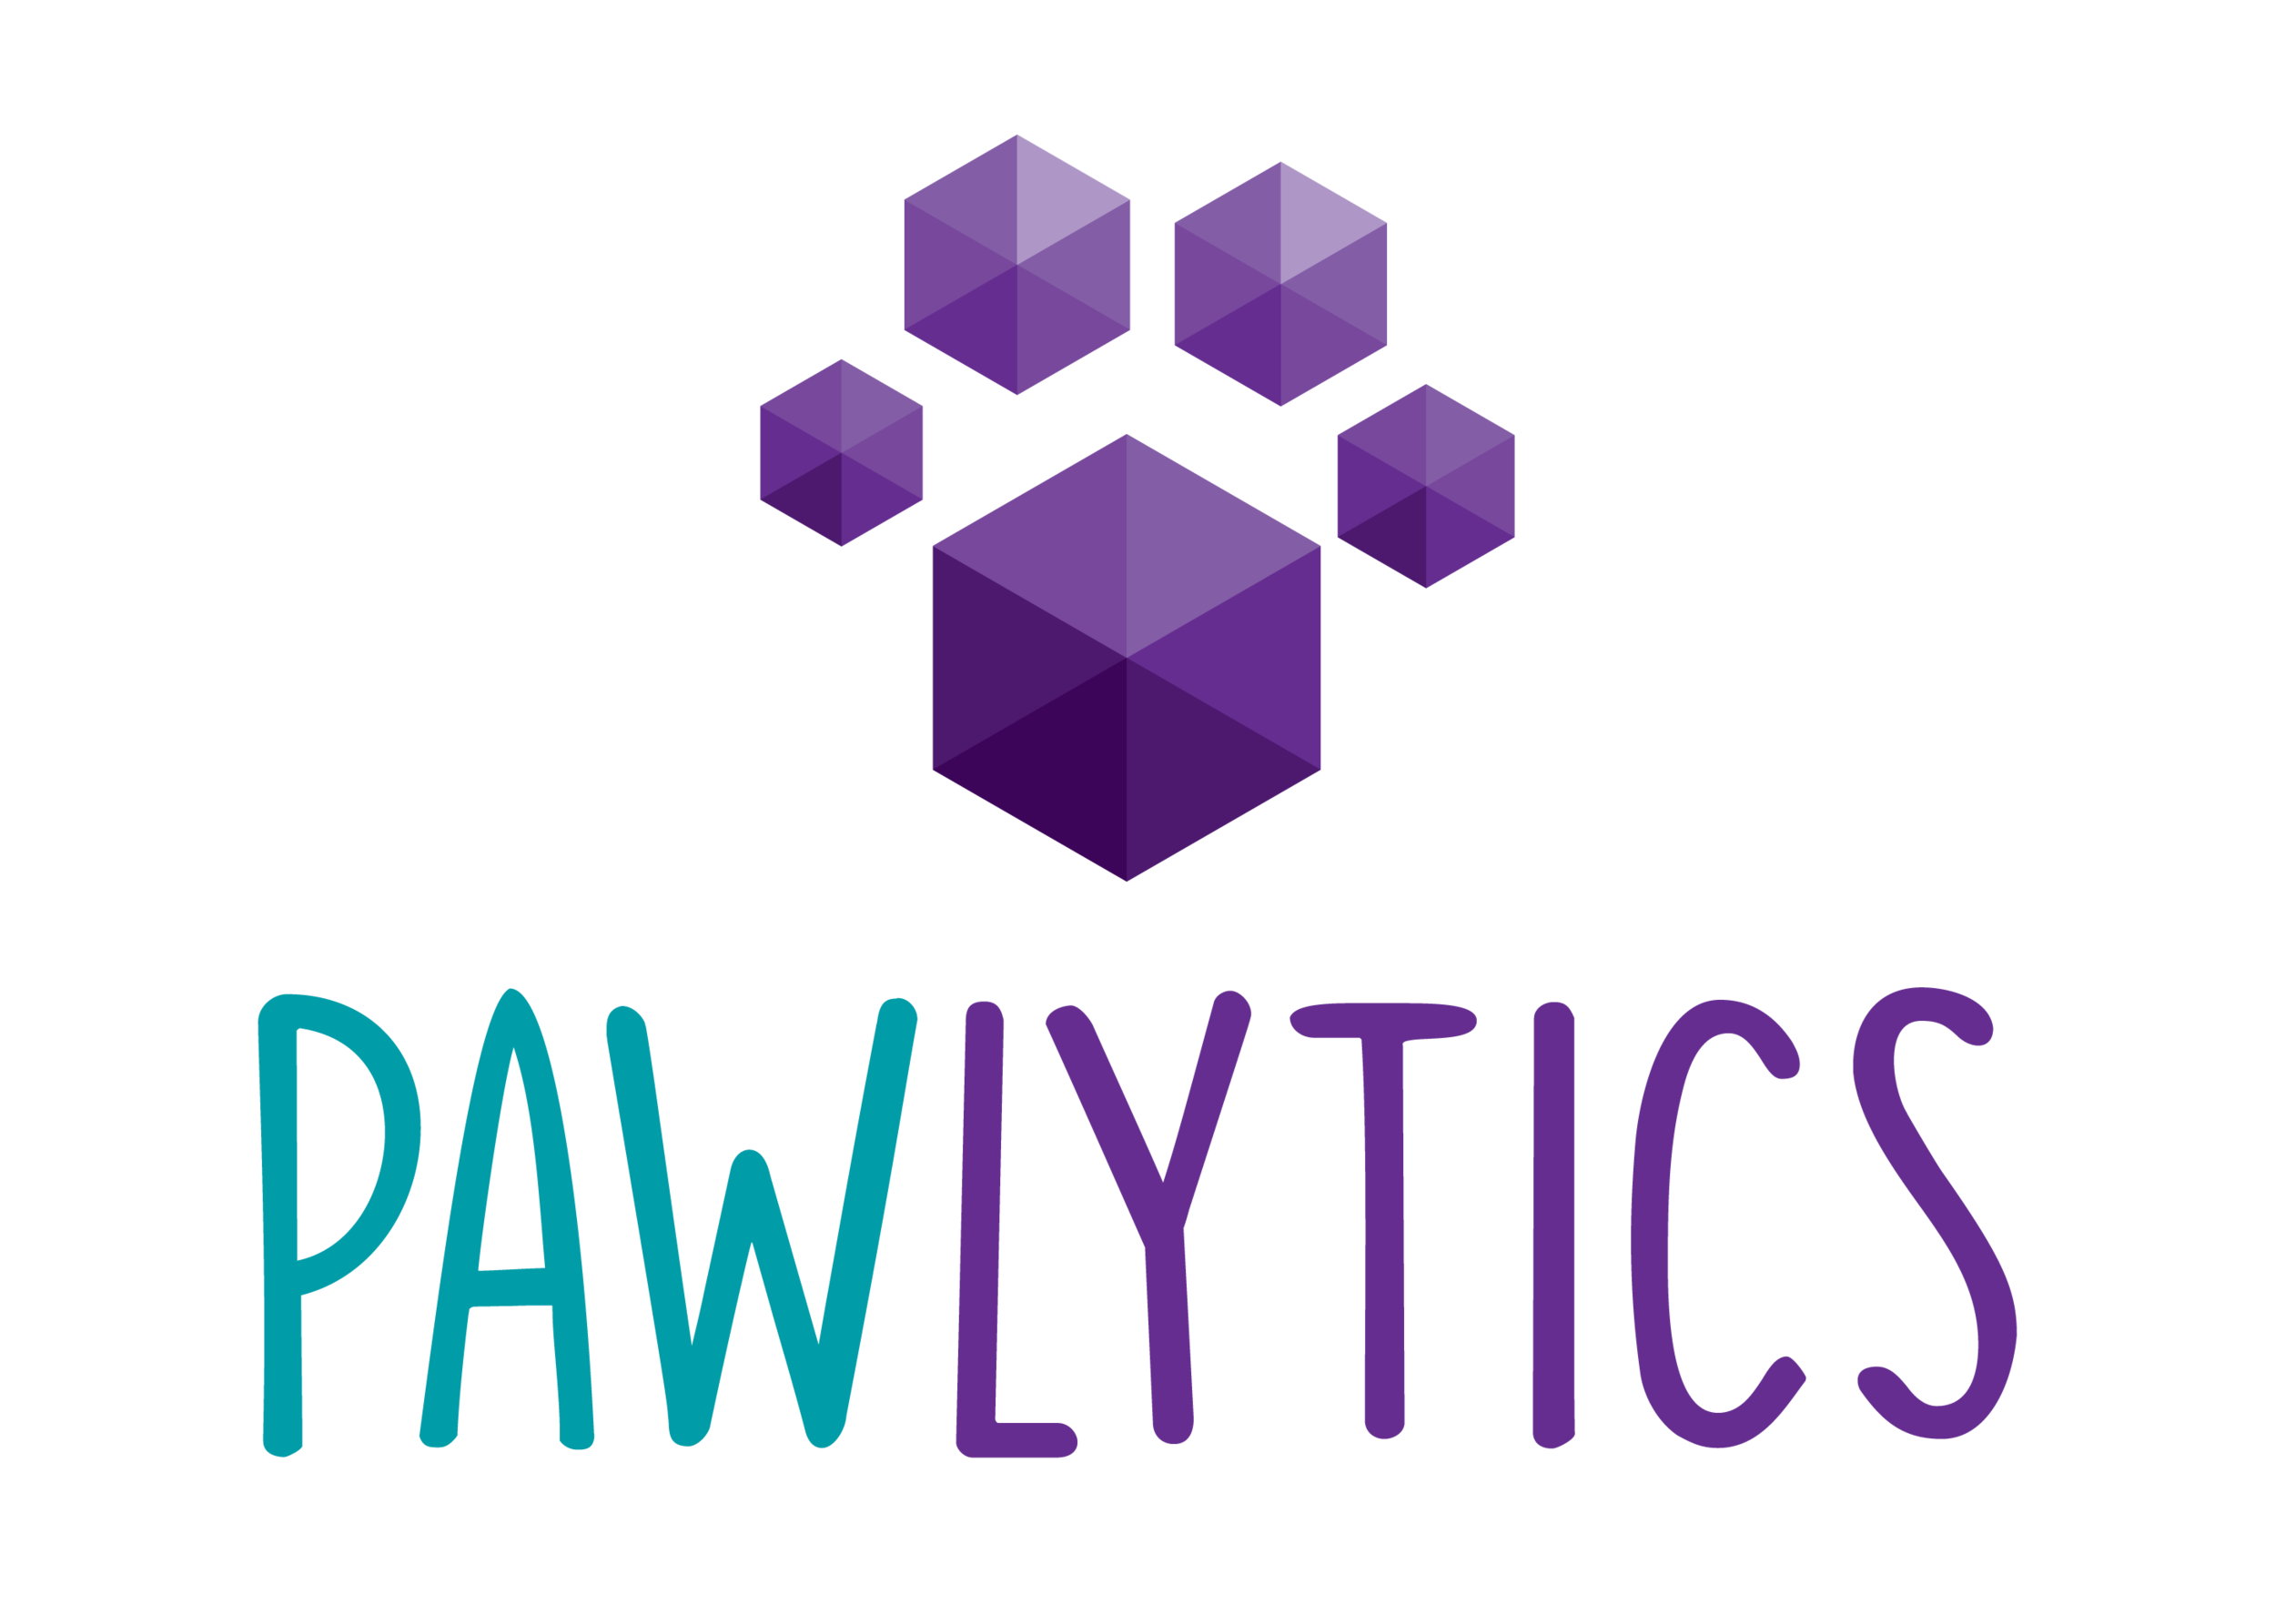 pawlytics_stacked_logo.png